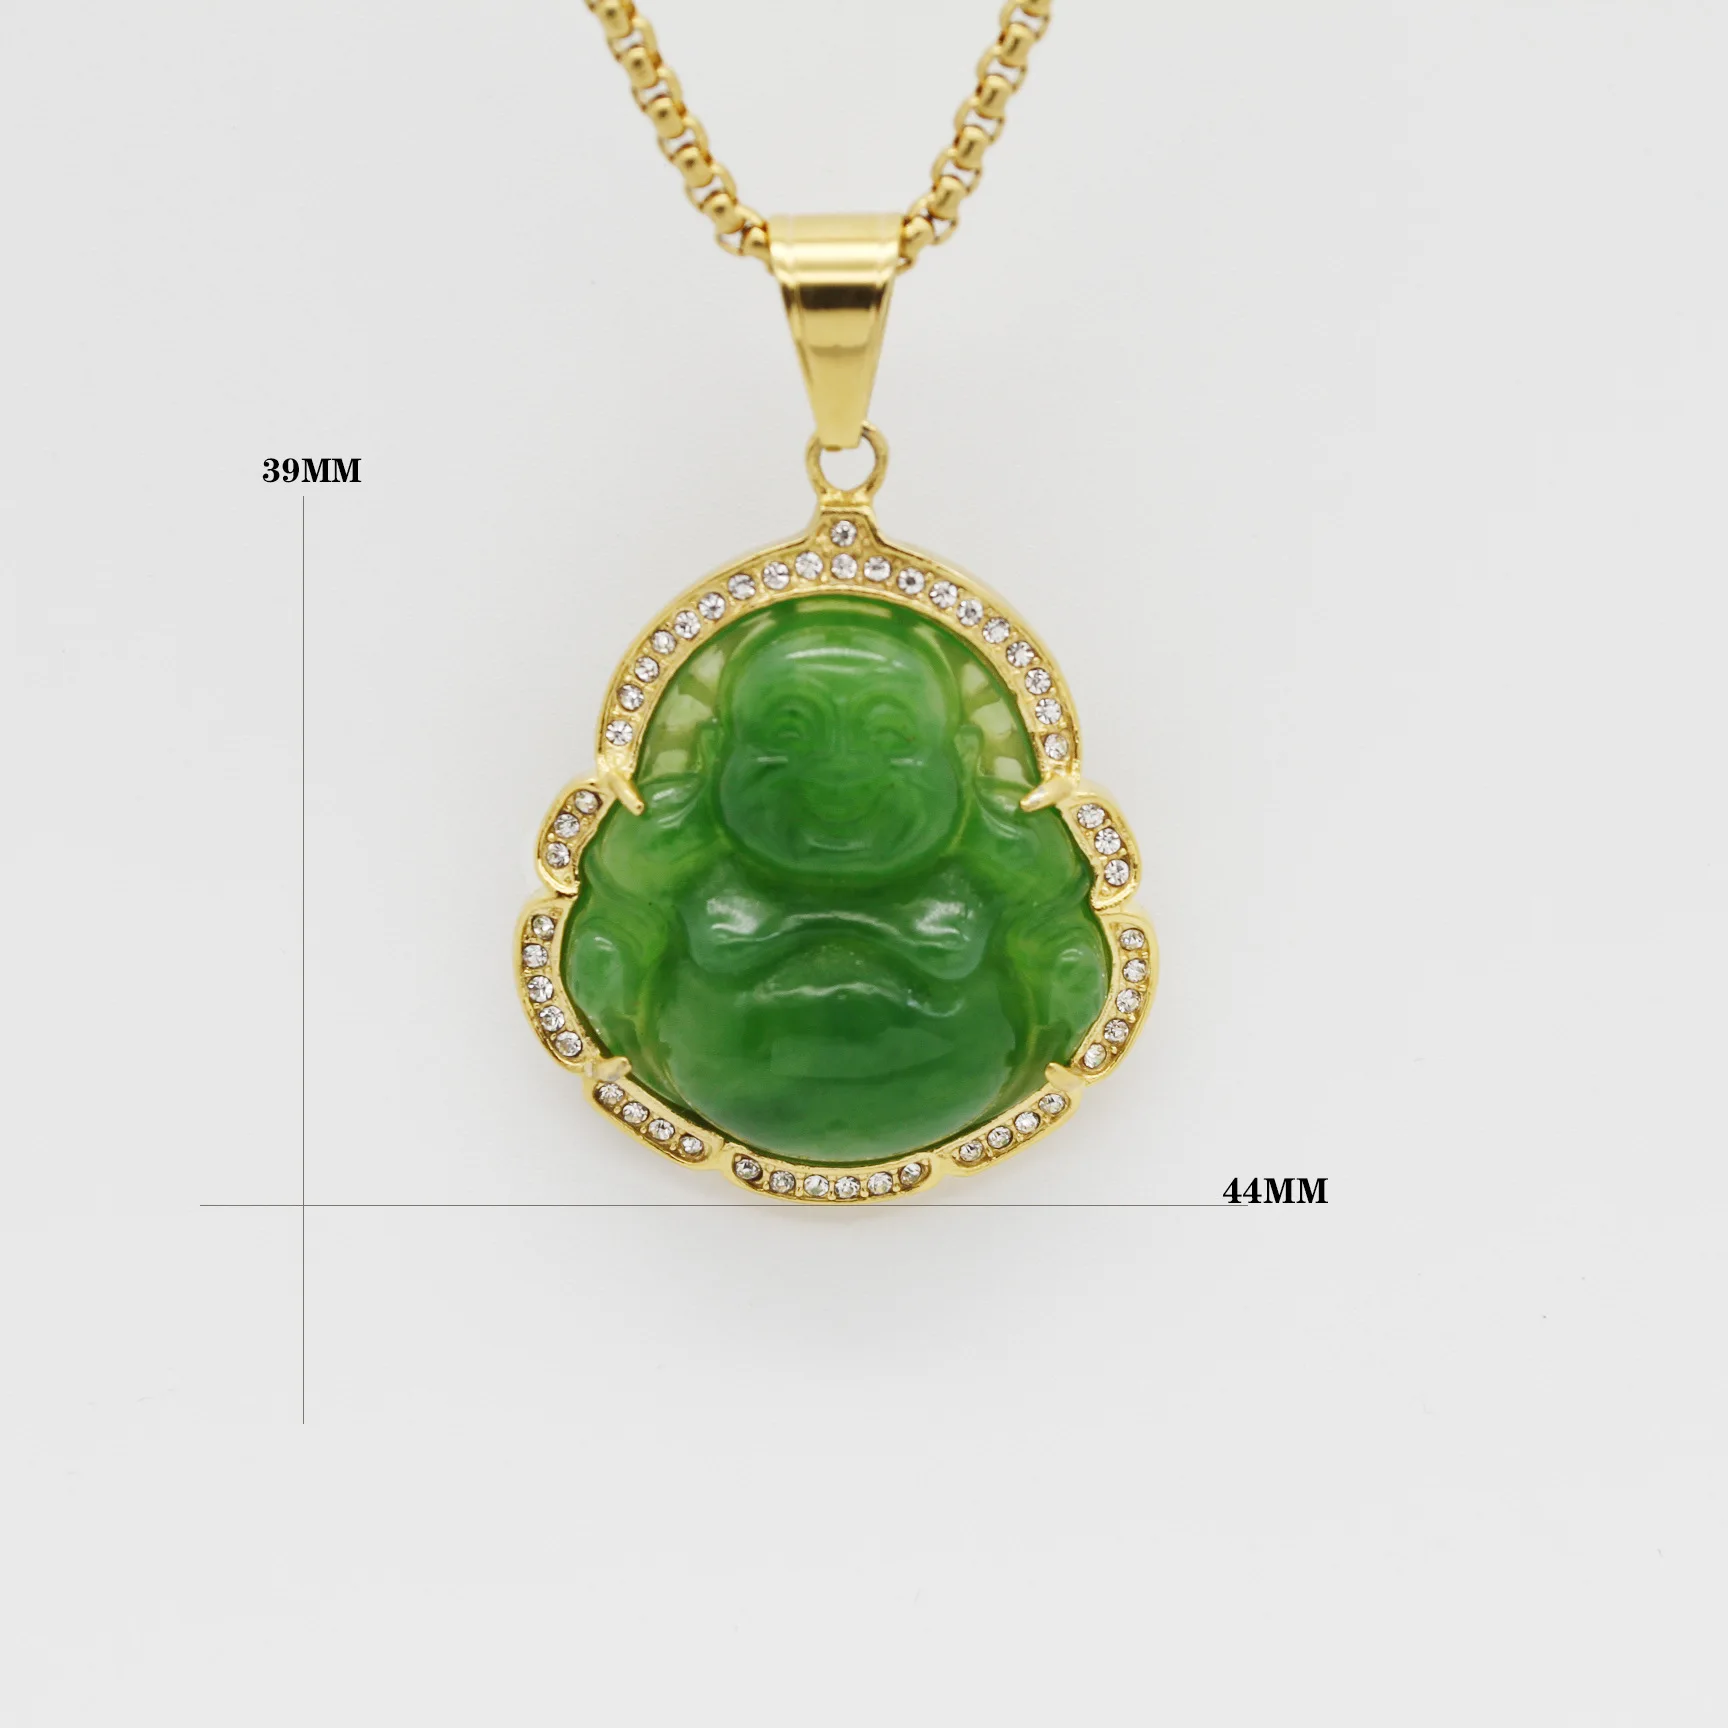 Green Agate Buddha Pendant Necklace Box Chain Choker Jewelry Stainless Steel Hot 